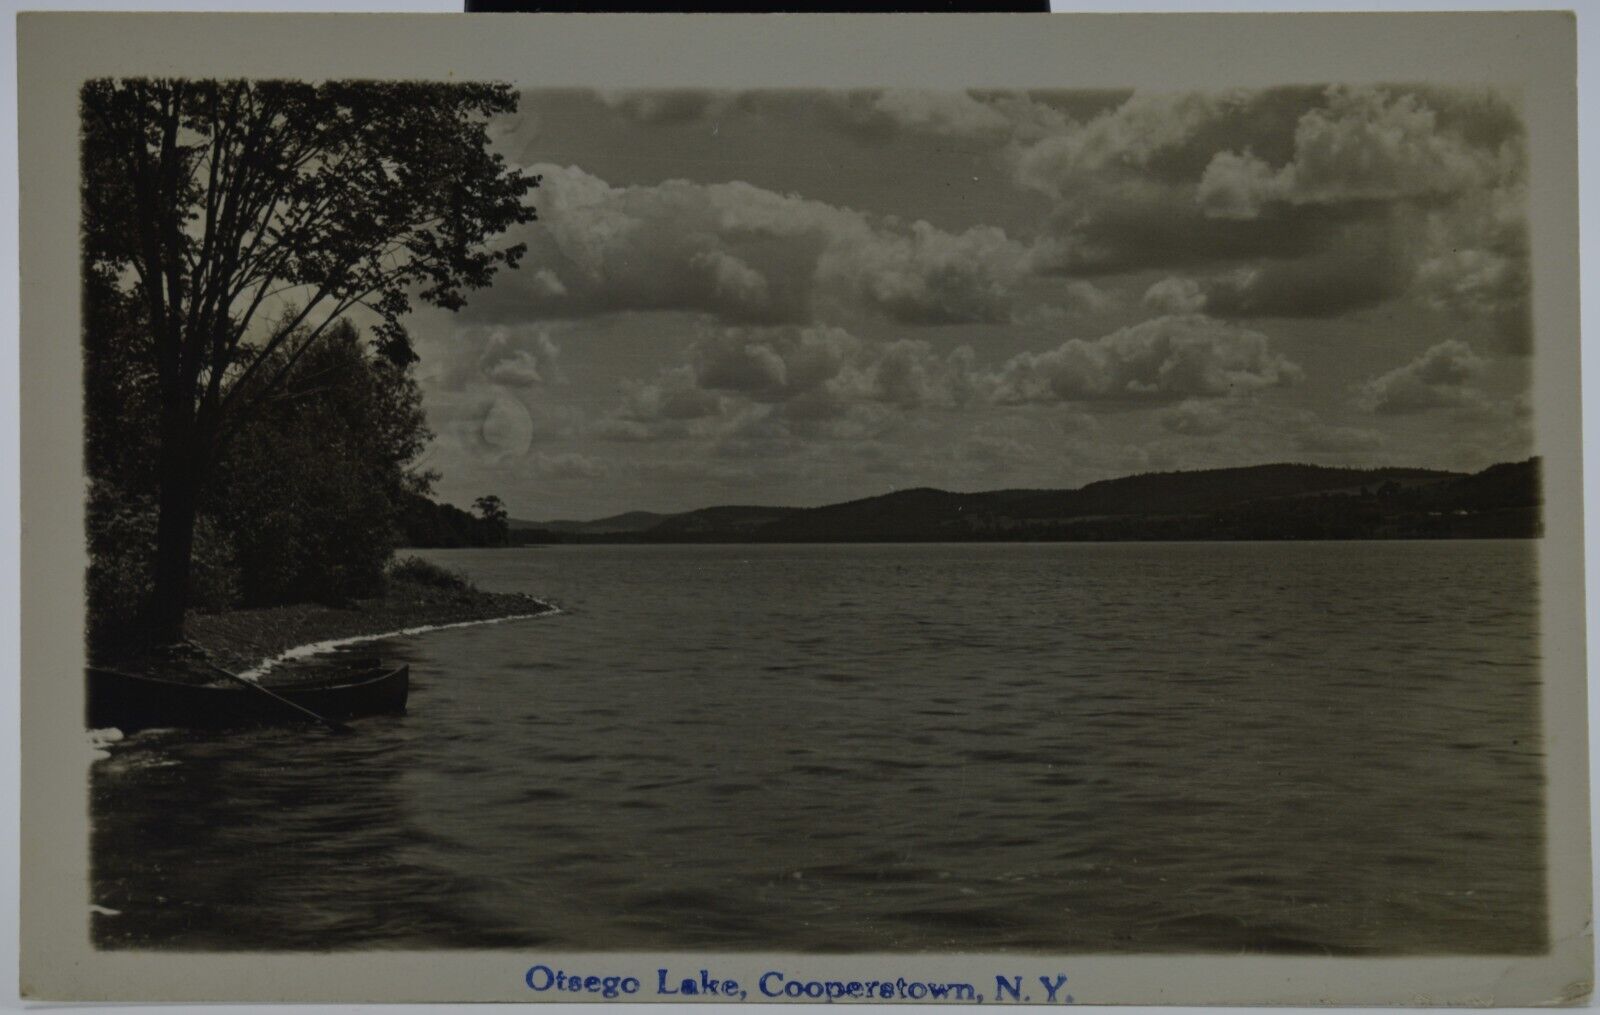 1937 - RPPC, Real Photo Postcard, Otsego Lake, Cooperstown, NY - Canoe on Beach